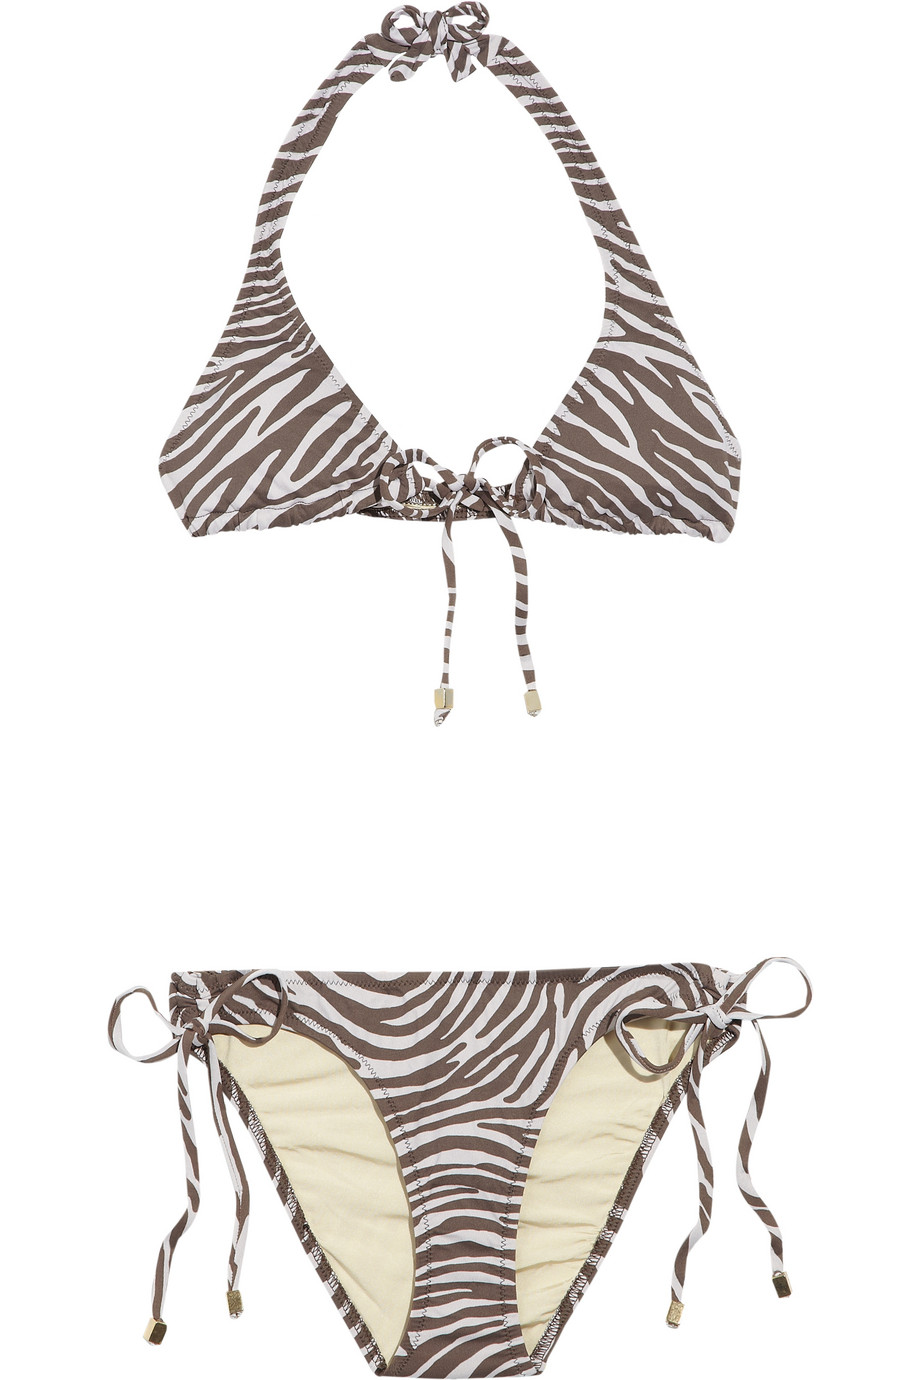 Melissa odabash Hazel Zebra-print Triangle Bikini | Lyst